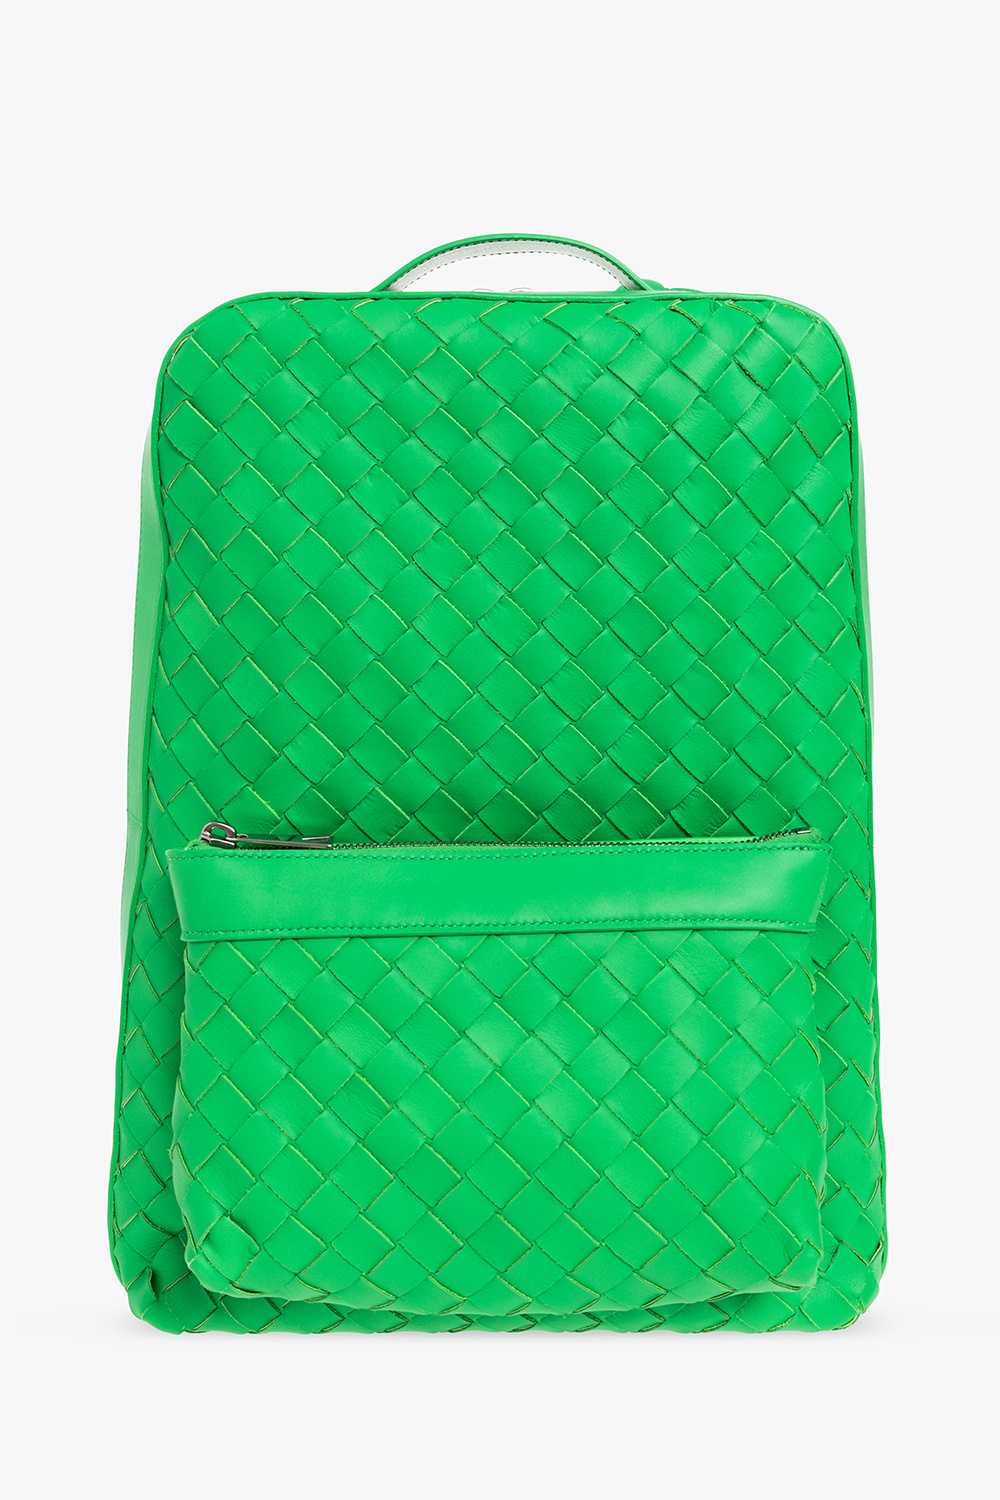 Bottega Veneta: Green Classic Duffle Bag